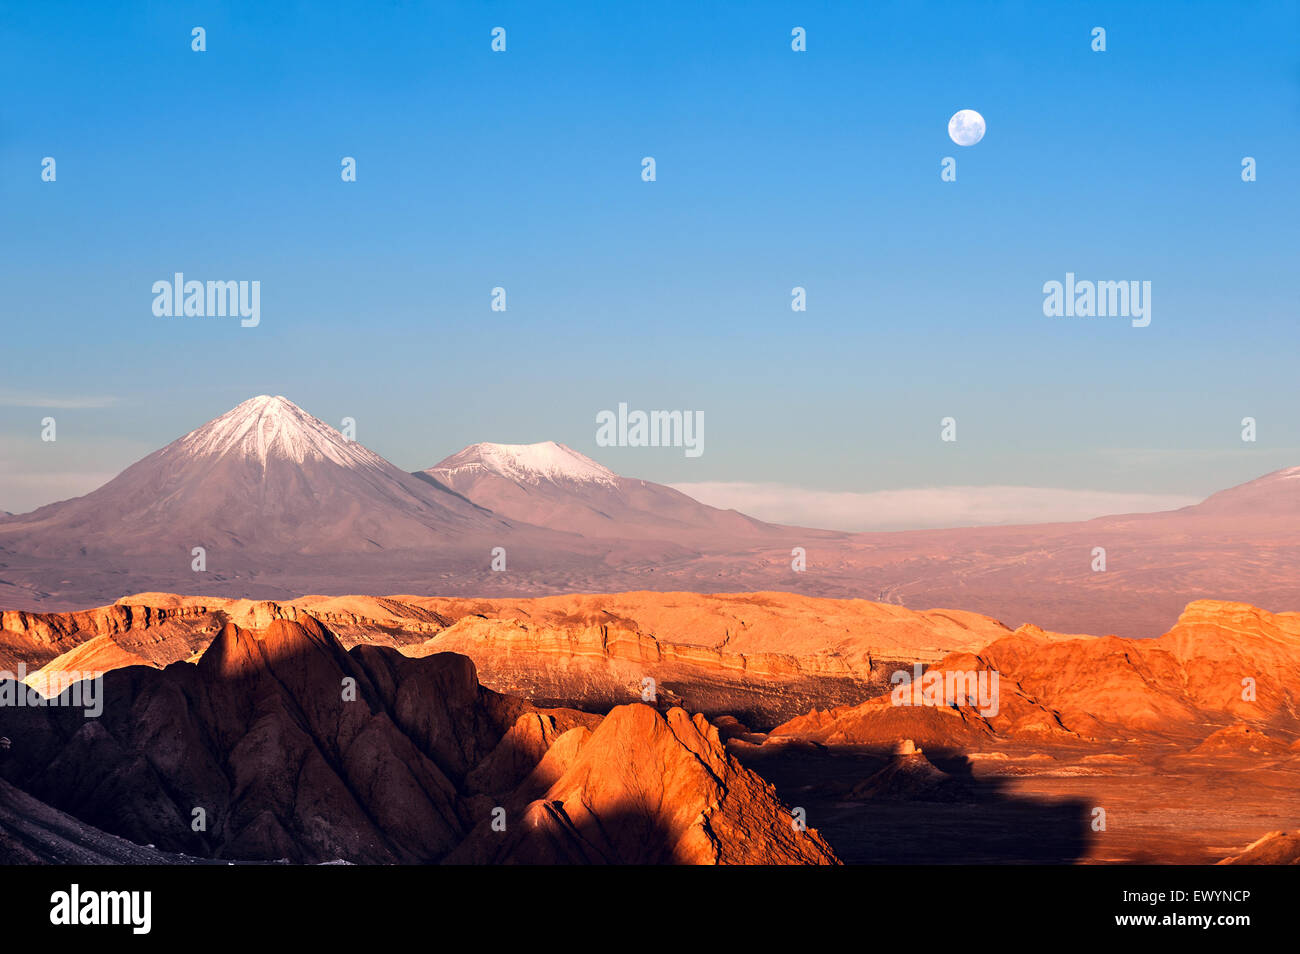 Vulkane Licancabur und Juriques, Tal des Mondes, Atacama, Chile Stockfoto